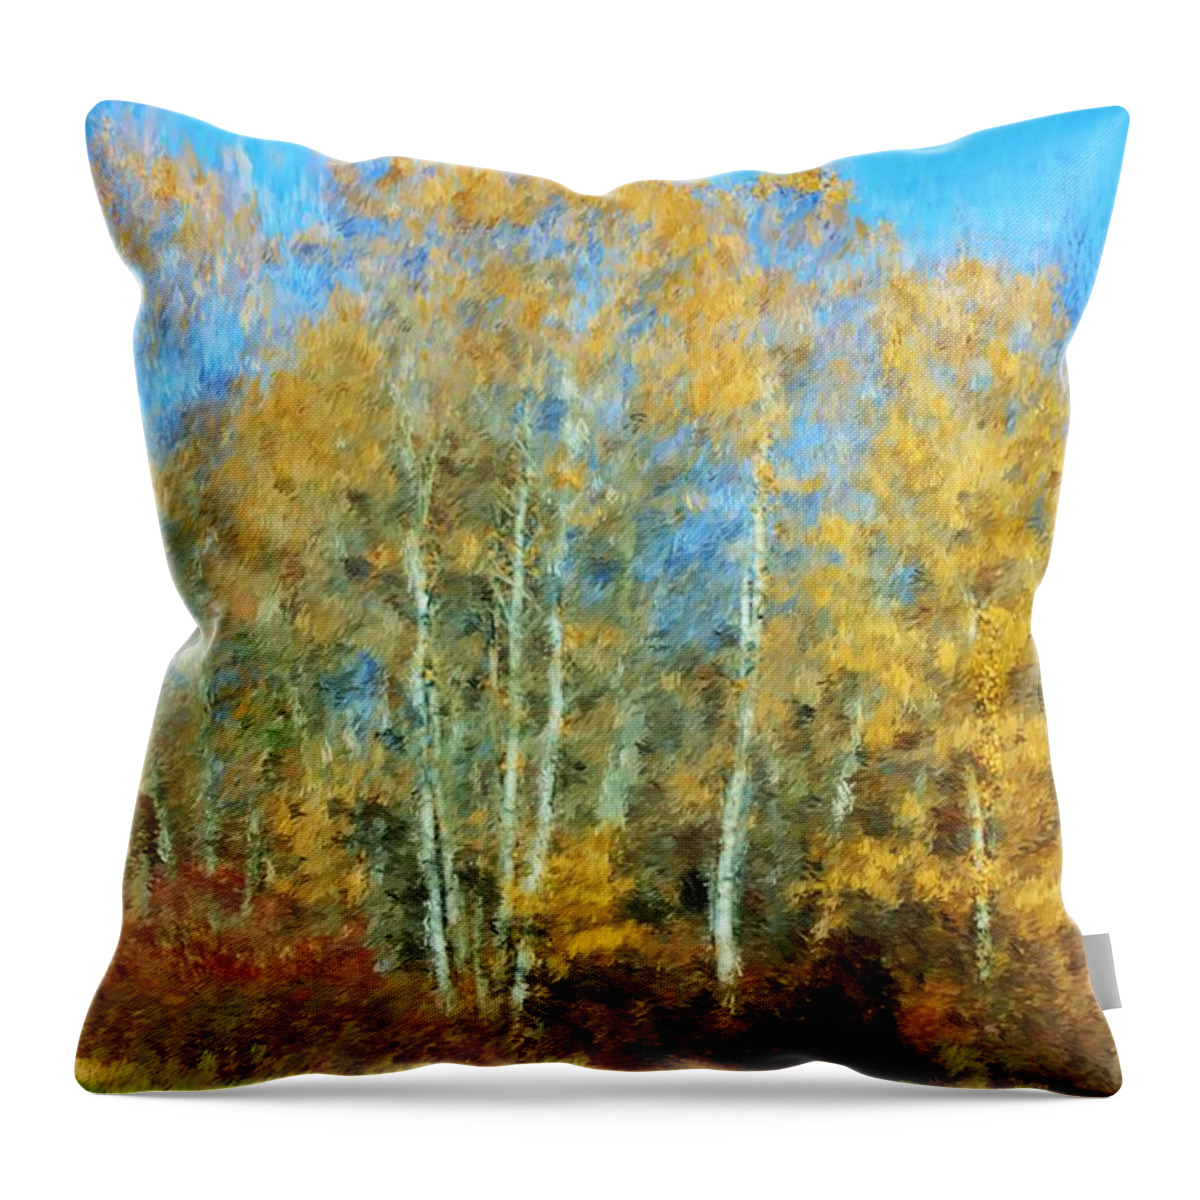  Throw Pillow featuring the photograph Autumn woodlot by David Lane